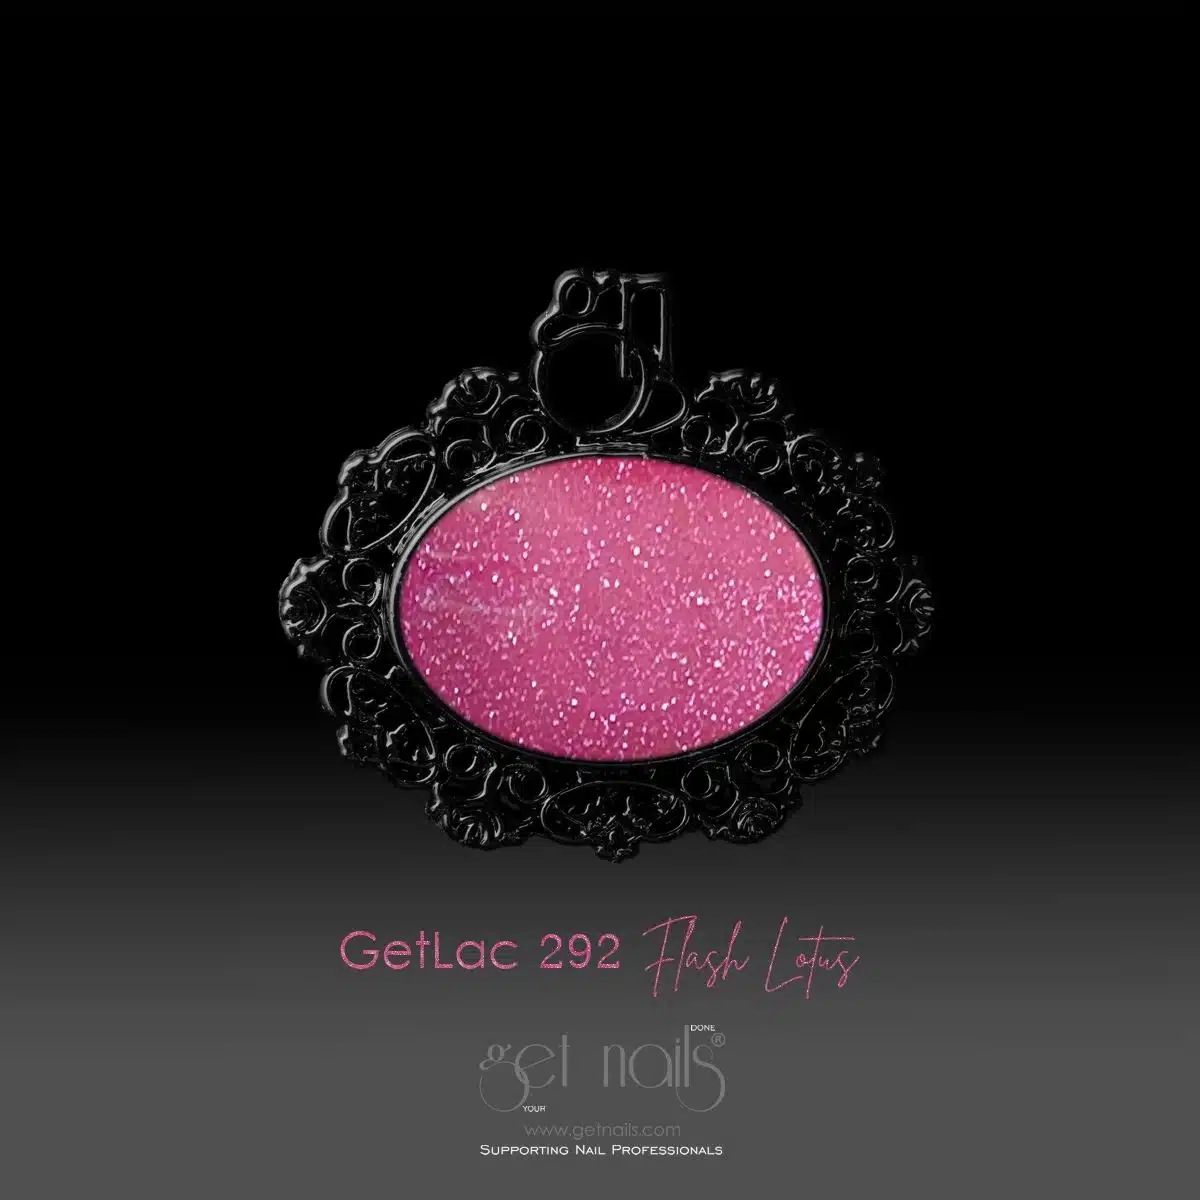 Get Nails Austria - GetLac 292 Flash Lotus 15 g